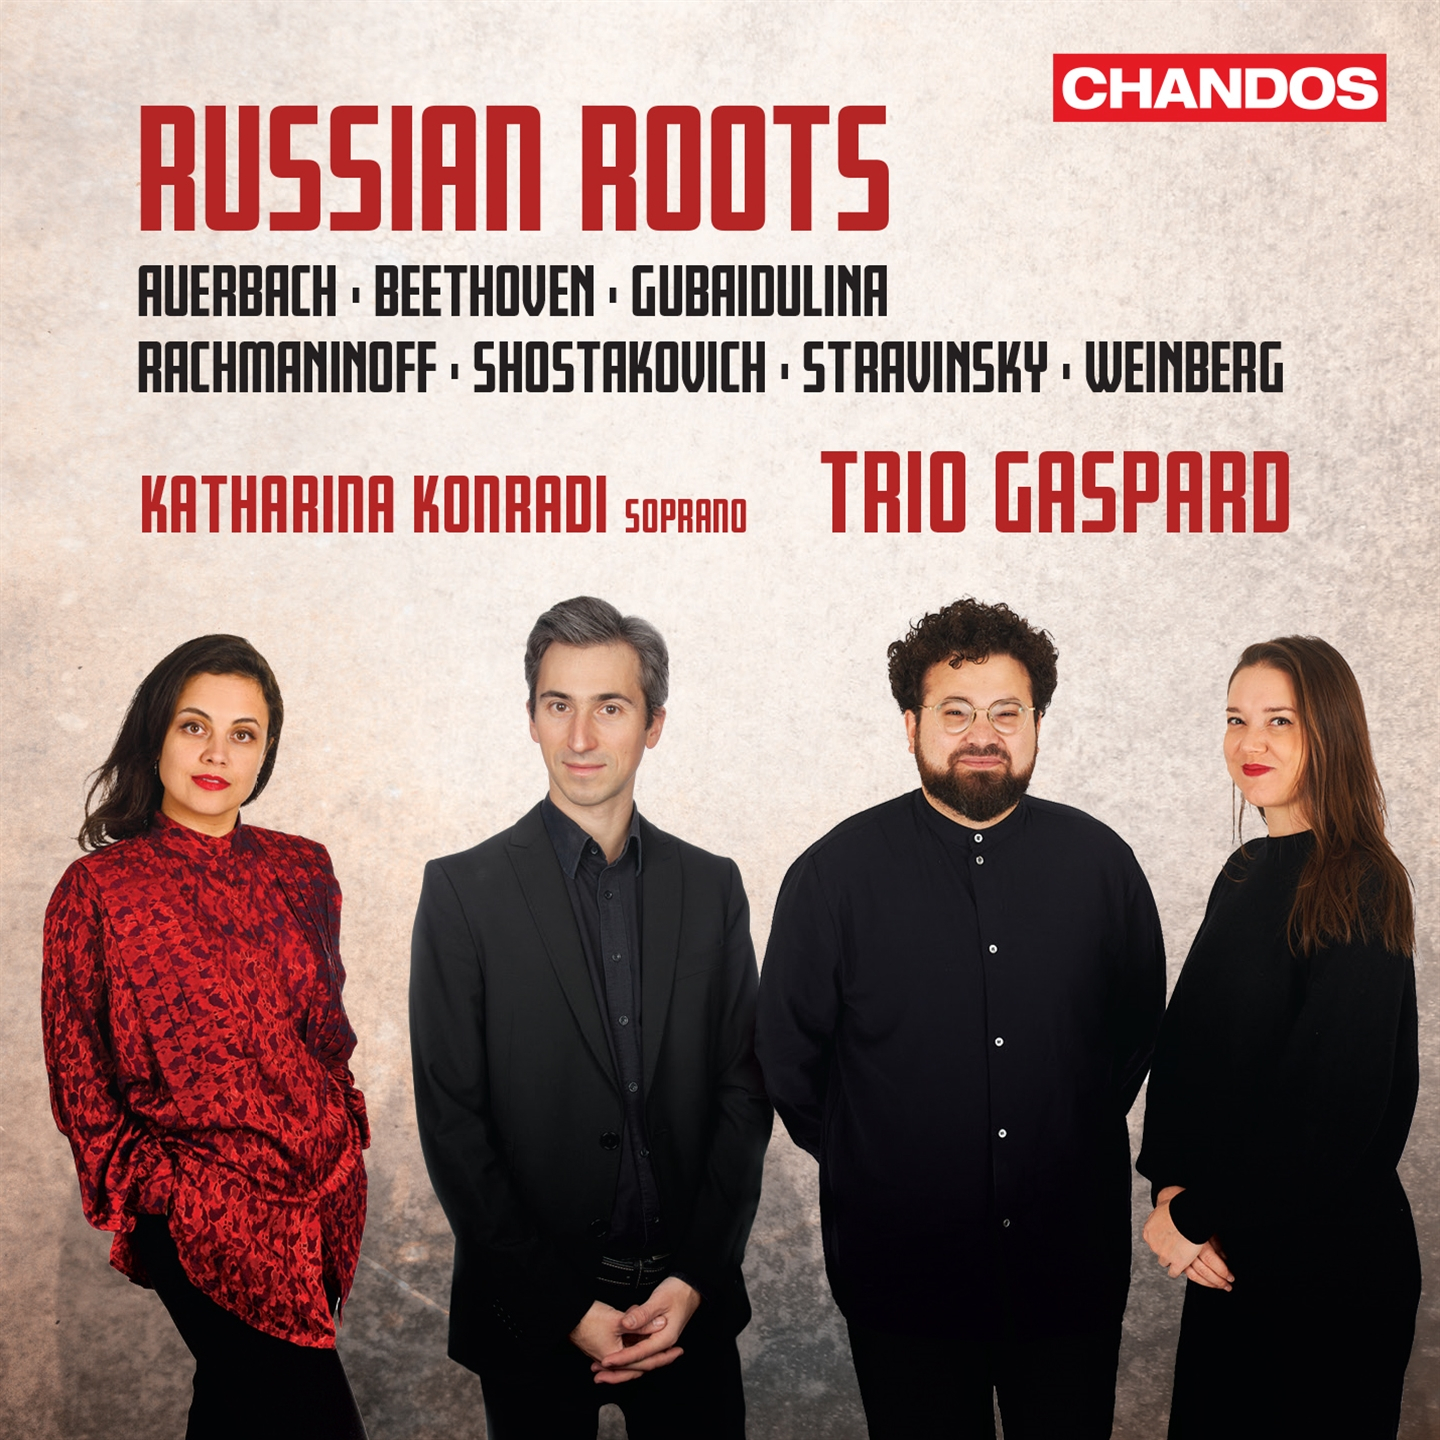 Katharina Konradi, Trio Gaspard - Russian Roots - Bild 1 von 1